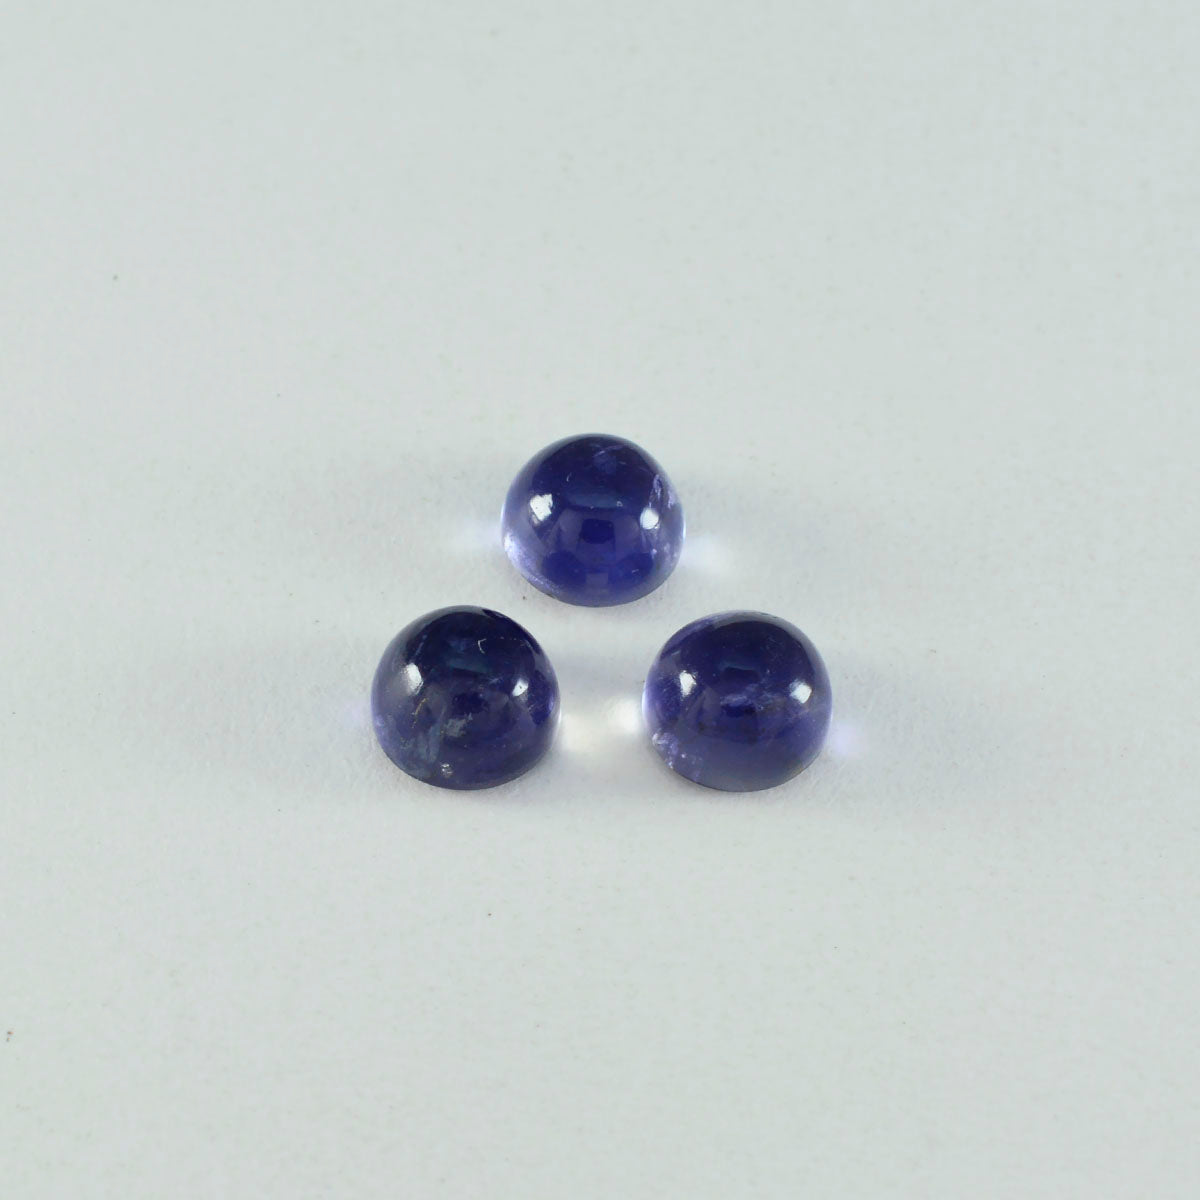 Riyogems 1PC Blue Iolite Cabochon 10x10 mm Round Shape Good Quality Loose Gemstone